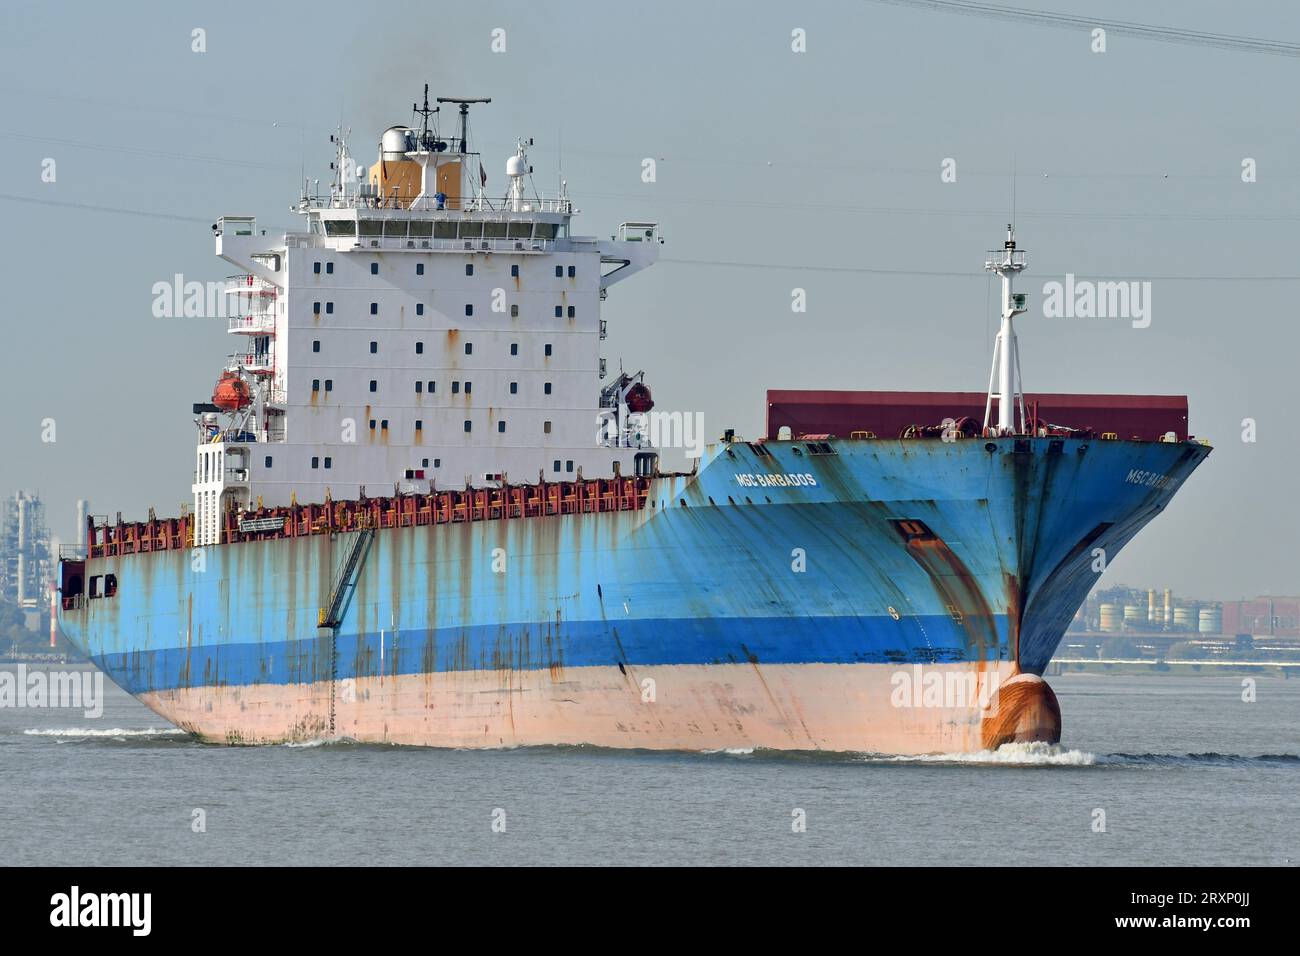 Containership MSC BARBADOS passing Lühe (river Elbe) bound for Hamburg Stock Photo